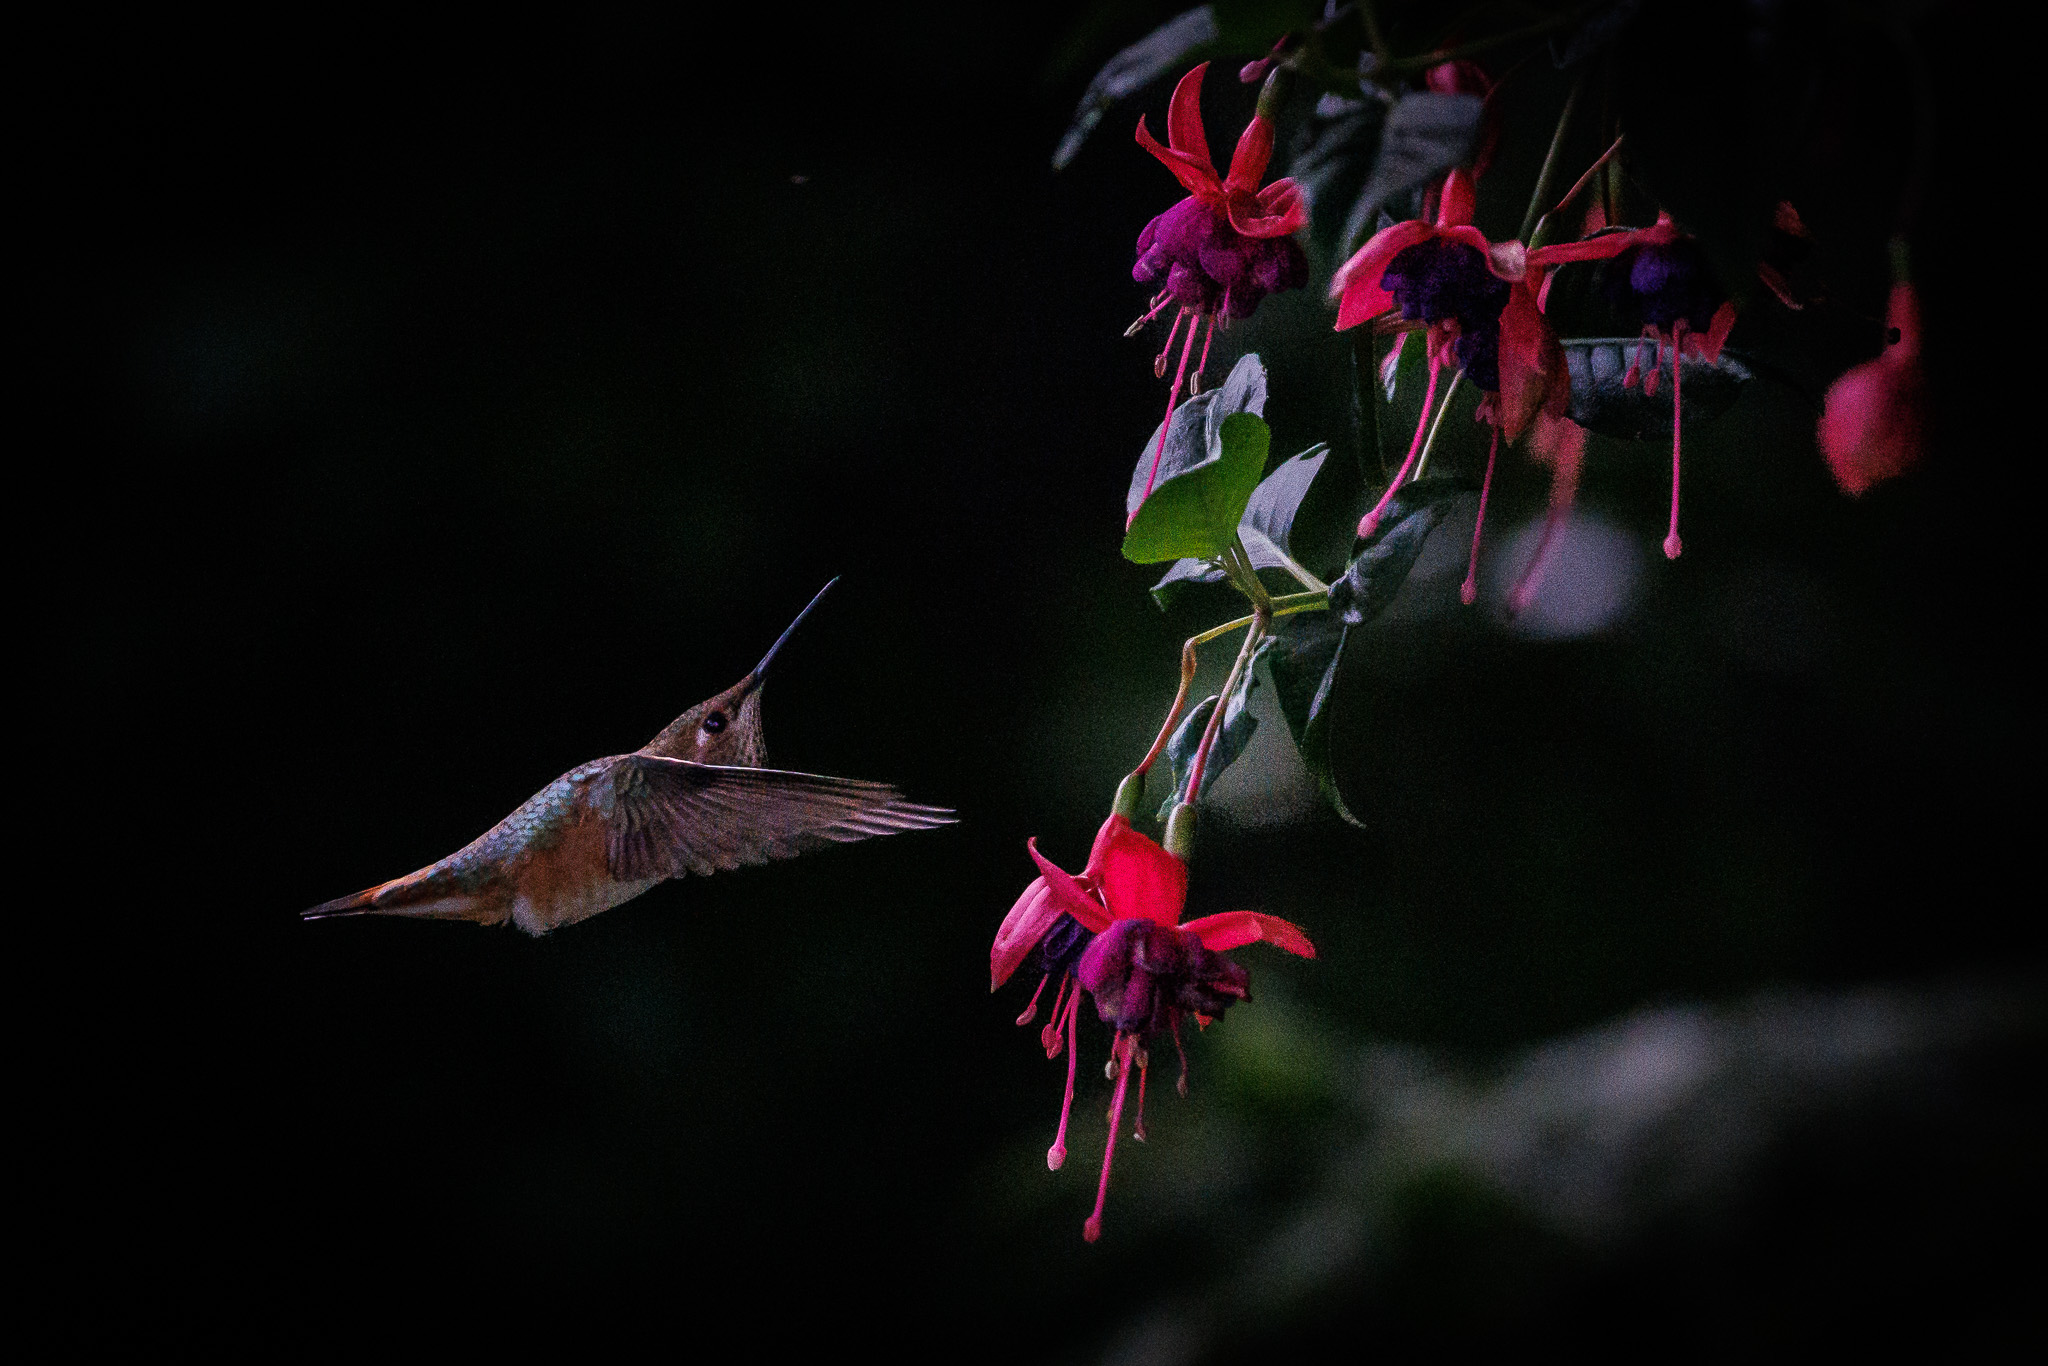 Wild Hummingbird hovers by flower against dark background